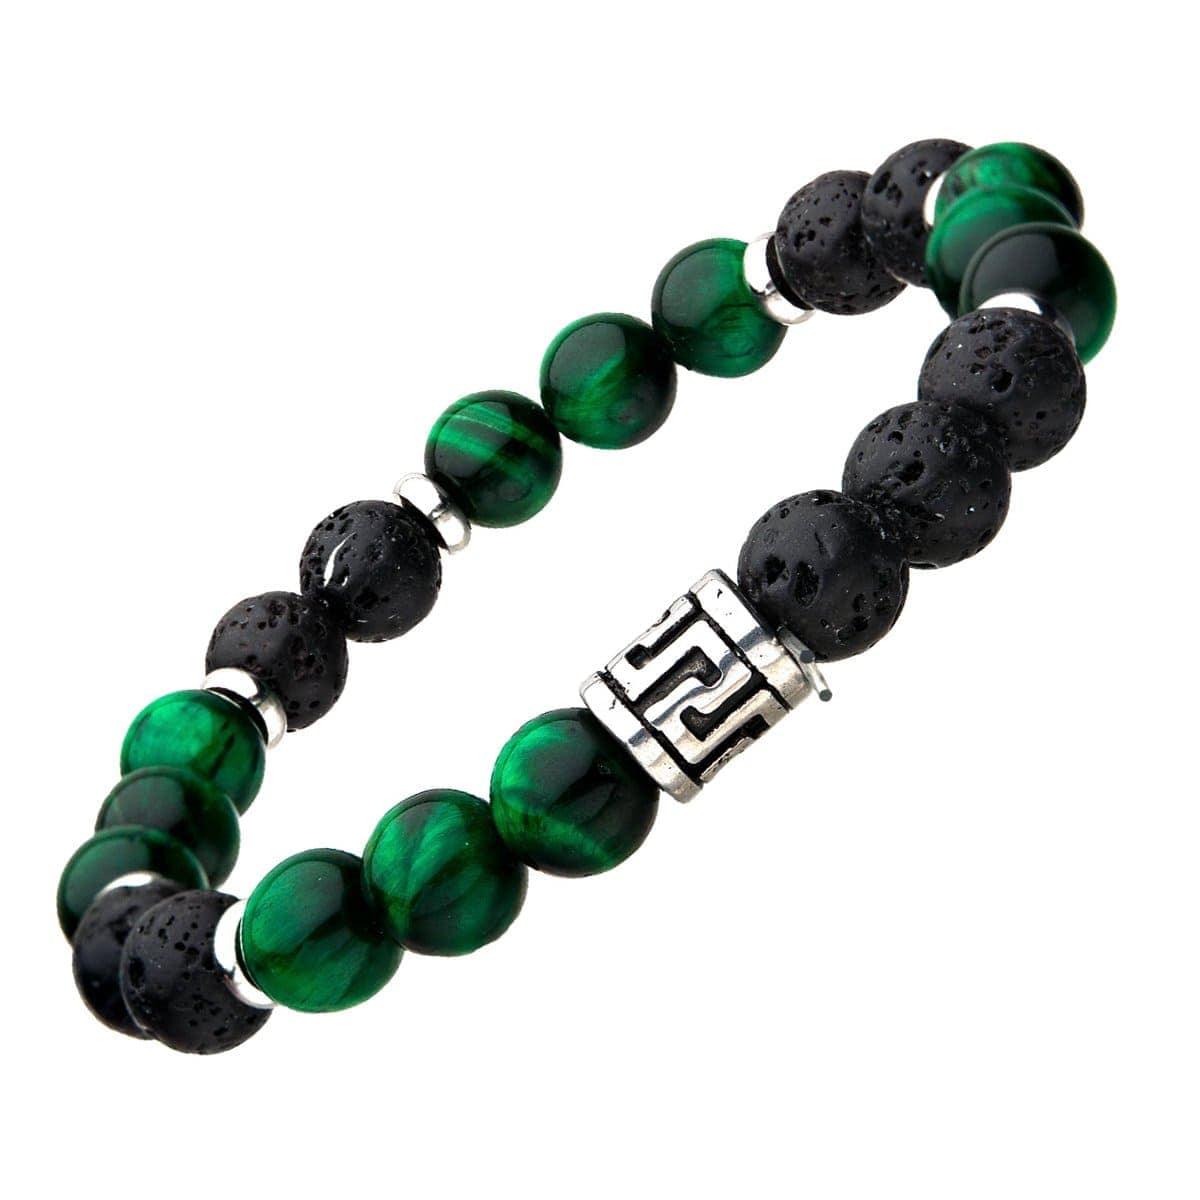 INOX JEWELRY Bracelets 8mm Green Tiger's Eye, Black Molten Lava Beads with Silver Tone Stainless Steel Detail Bracelet BR118LAVAKG